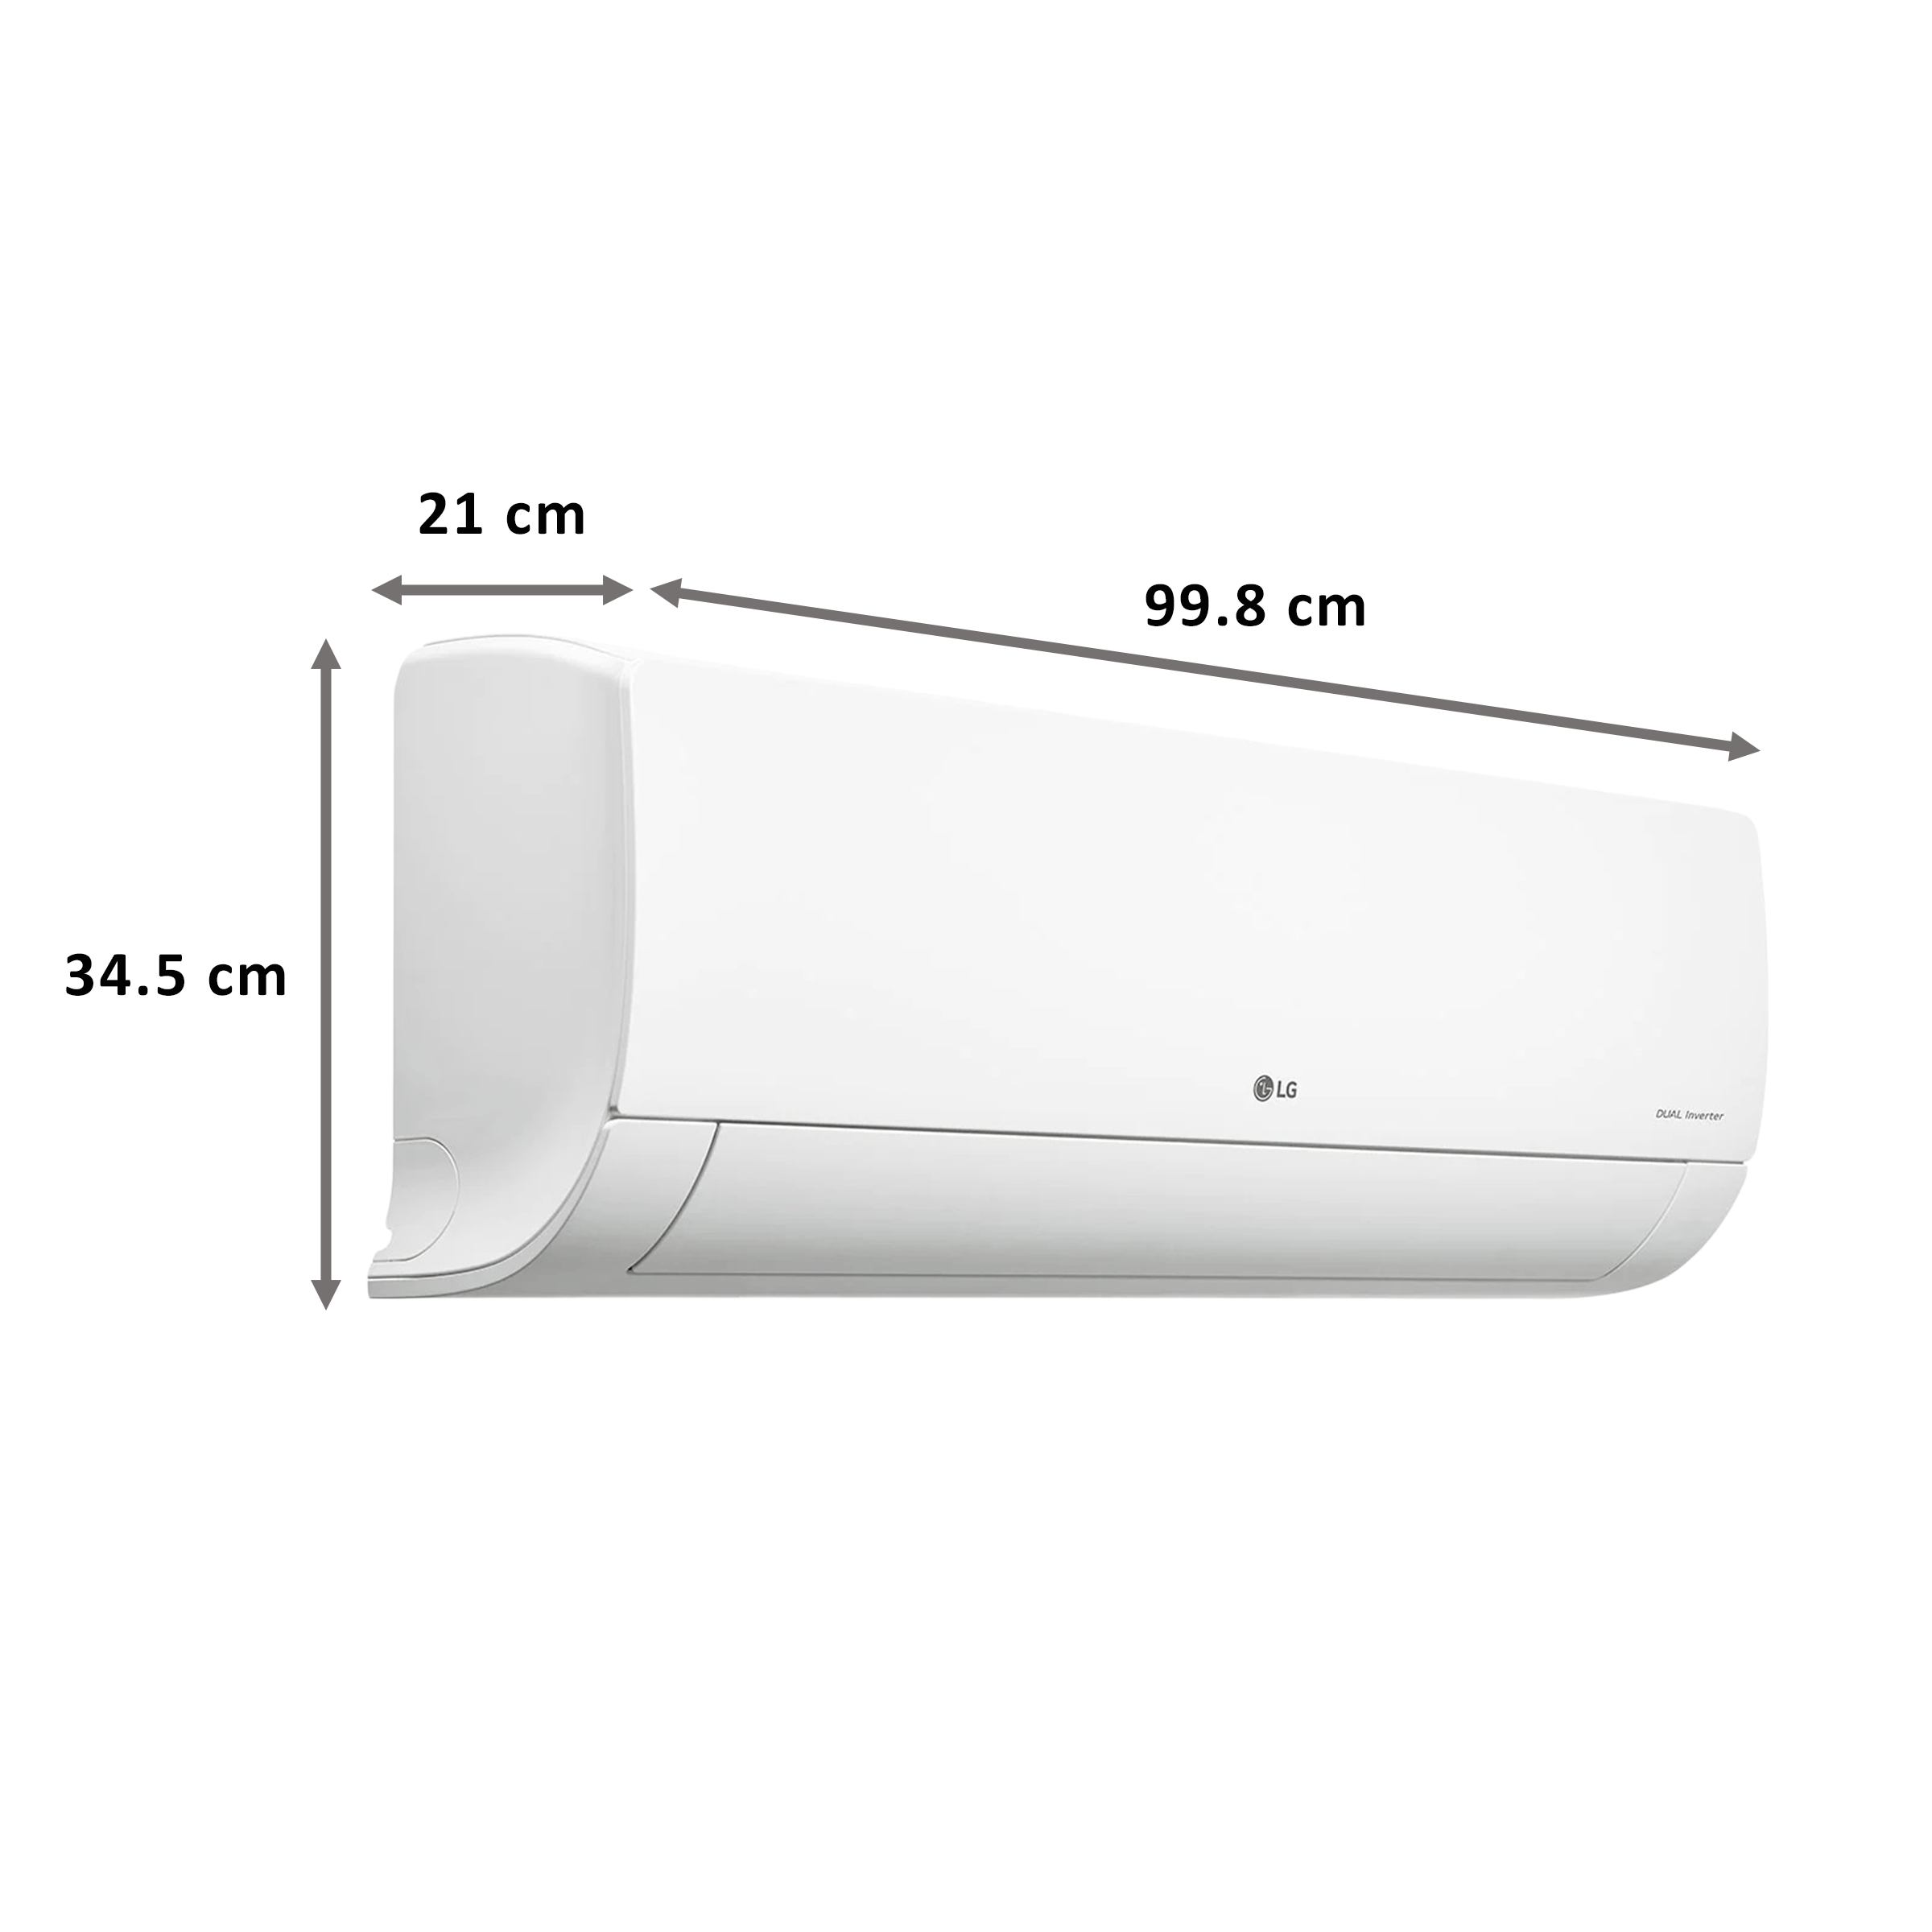  LG 1.5 Ton 4 Star Inverter Split AC (Copper Condenser, PS-Q19BWYF, White)_2